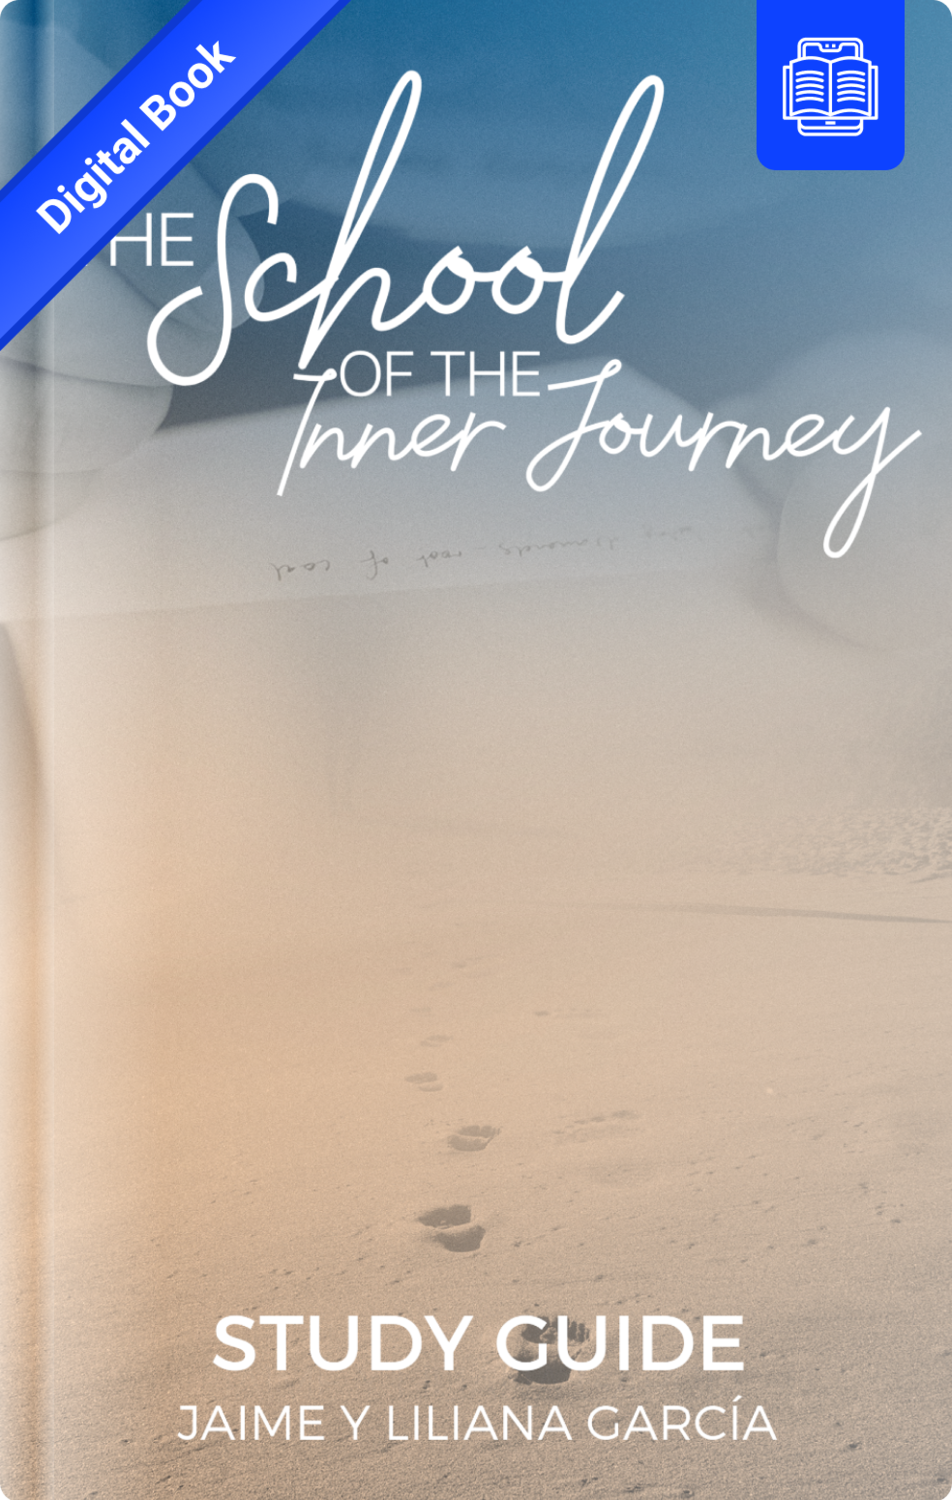 School Of The Inner Journey - Study Guide - Digital